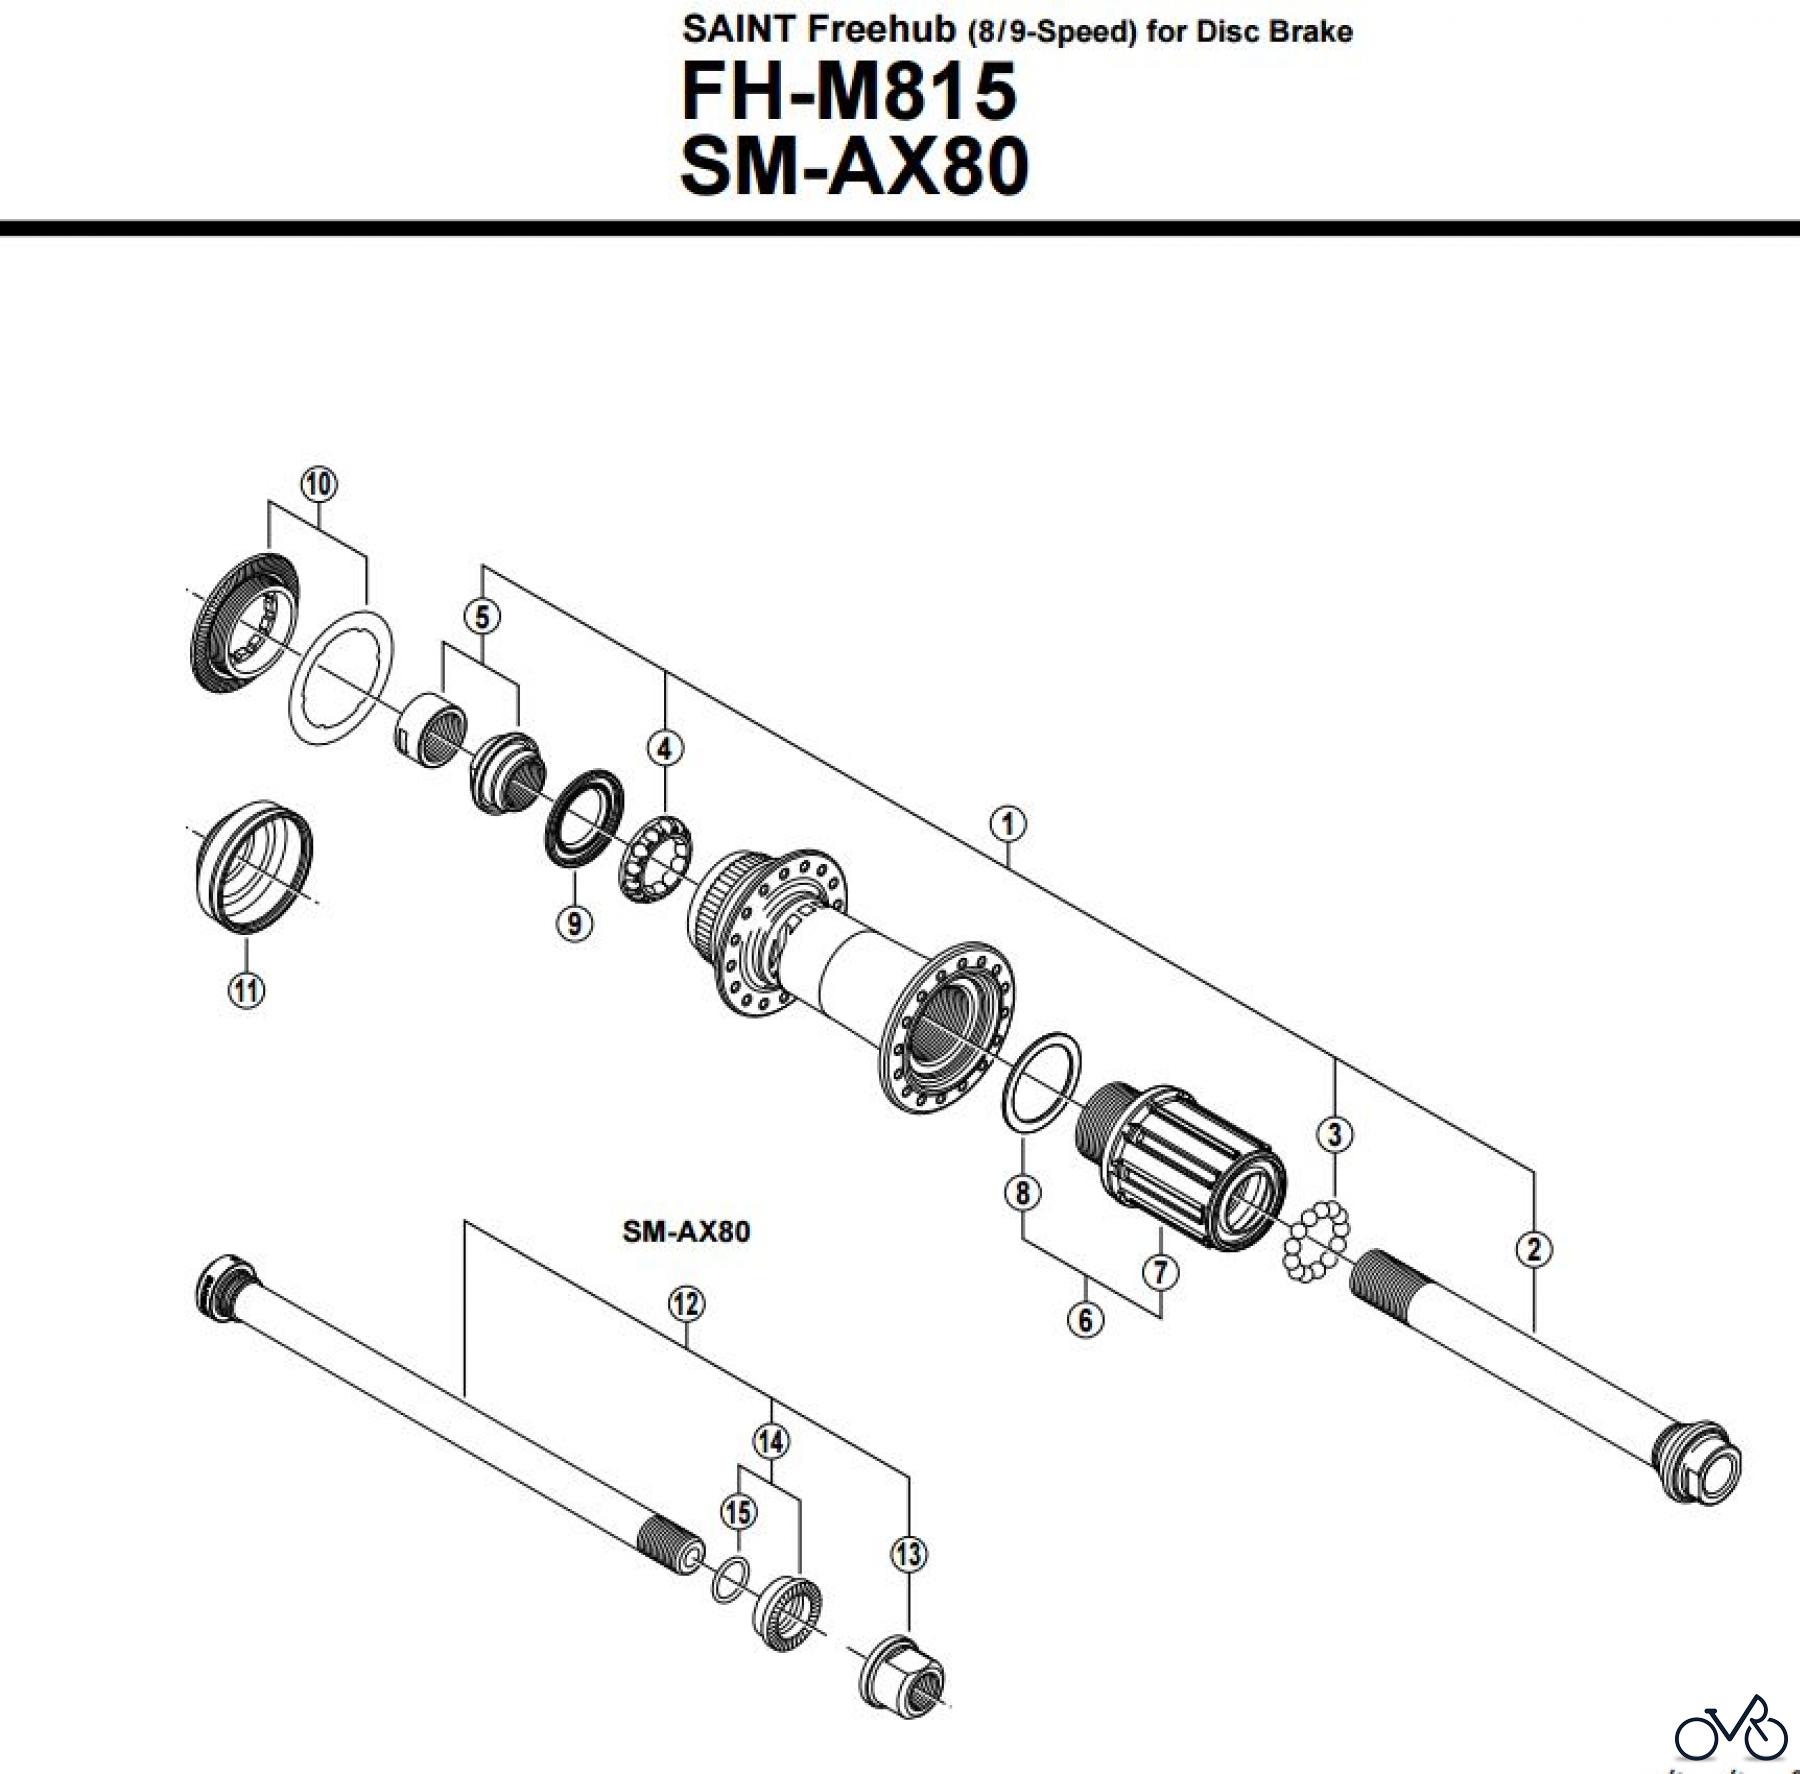  Shimano FH Free Hub - Freilaufnabe FH-M815 SAINT Freehub (8/9-Speed) for Disc Brake